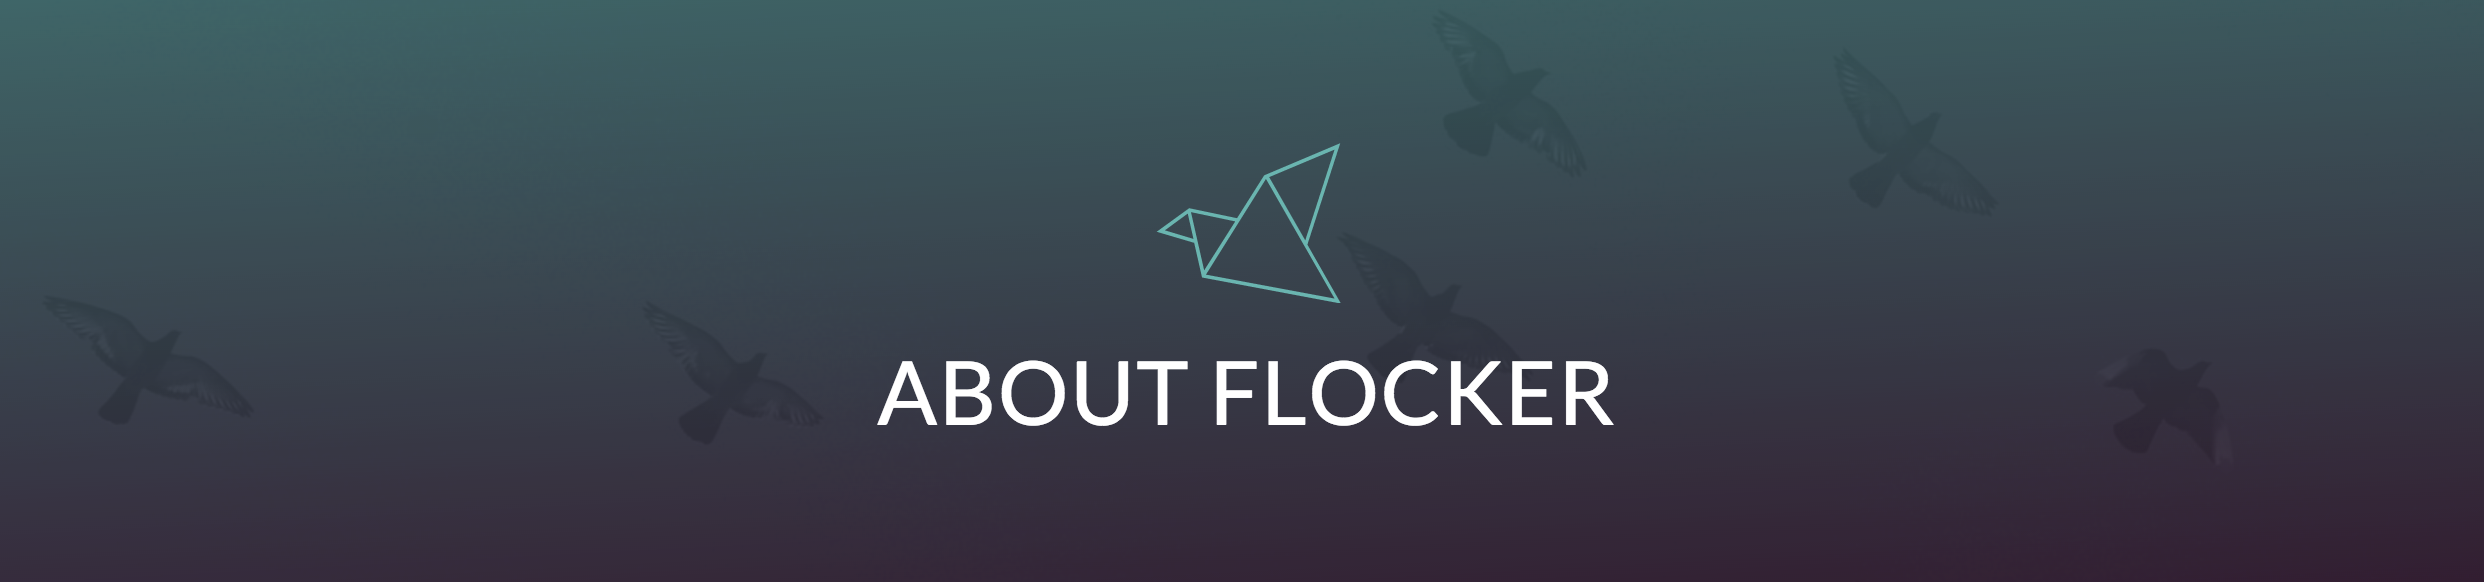 flocker_logo.png